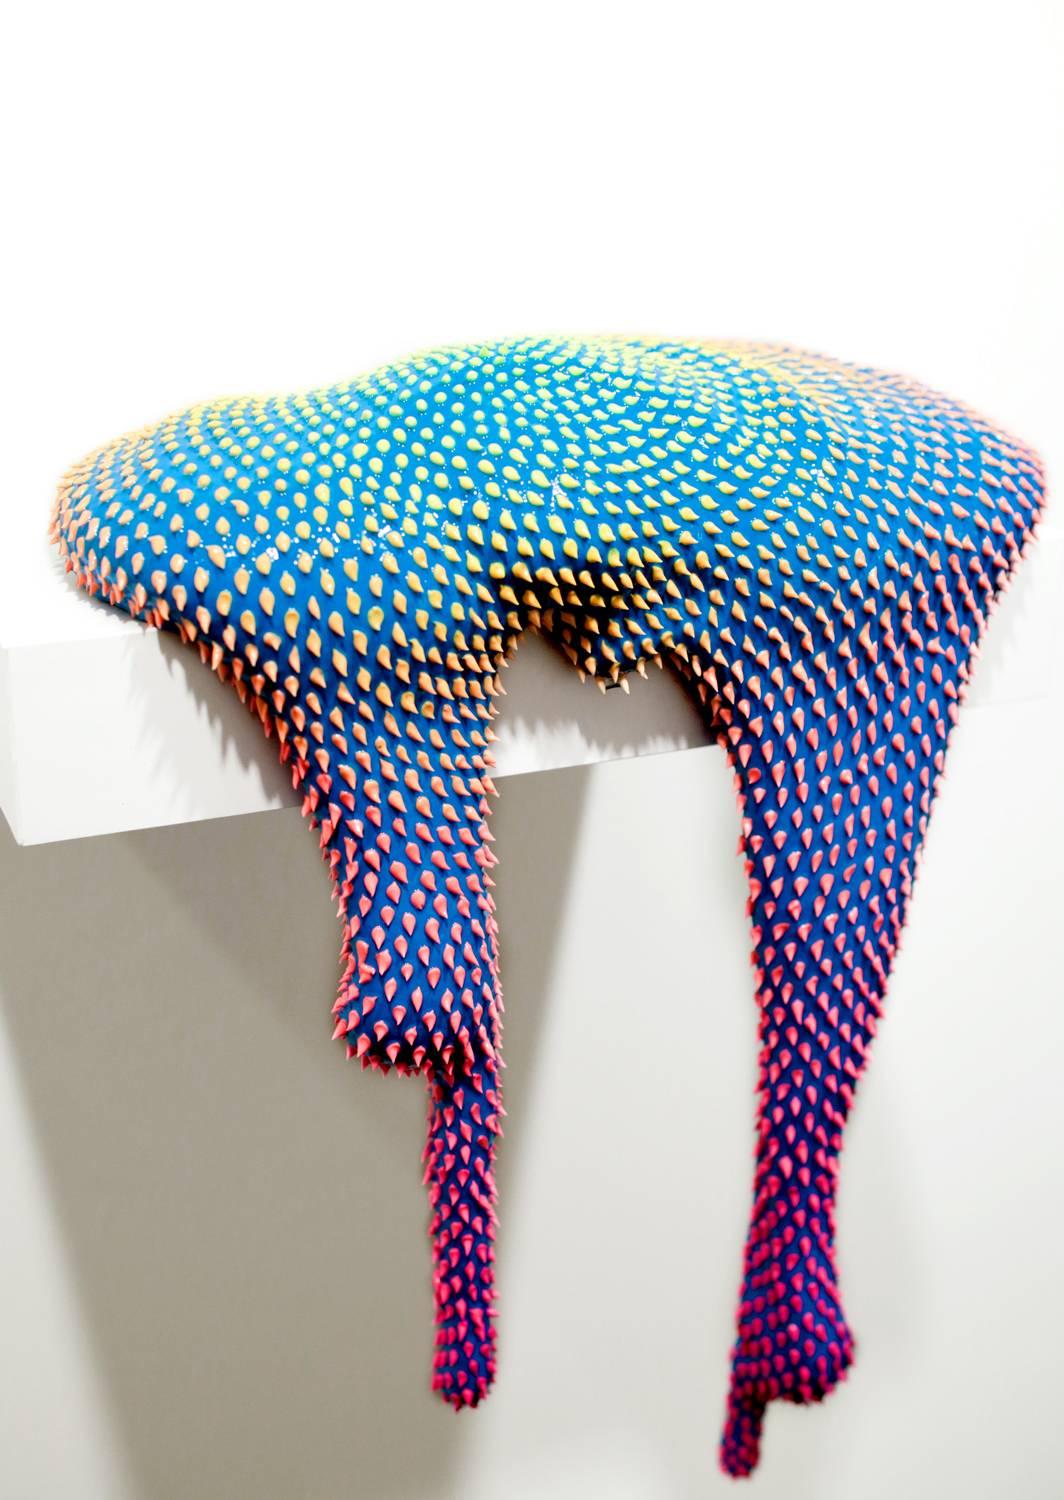 Dan Lam Abstract Sculpture - Can't Resist